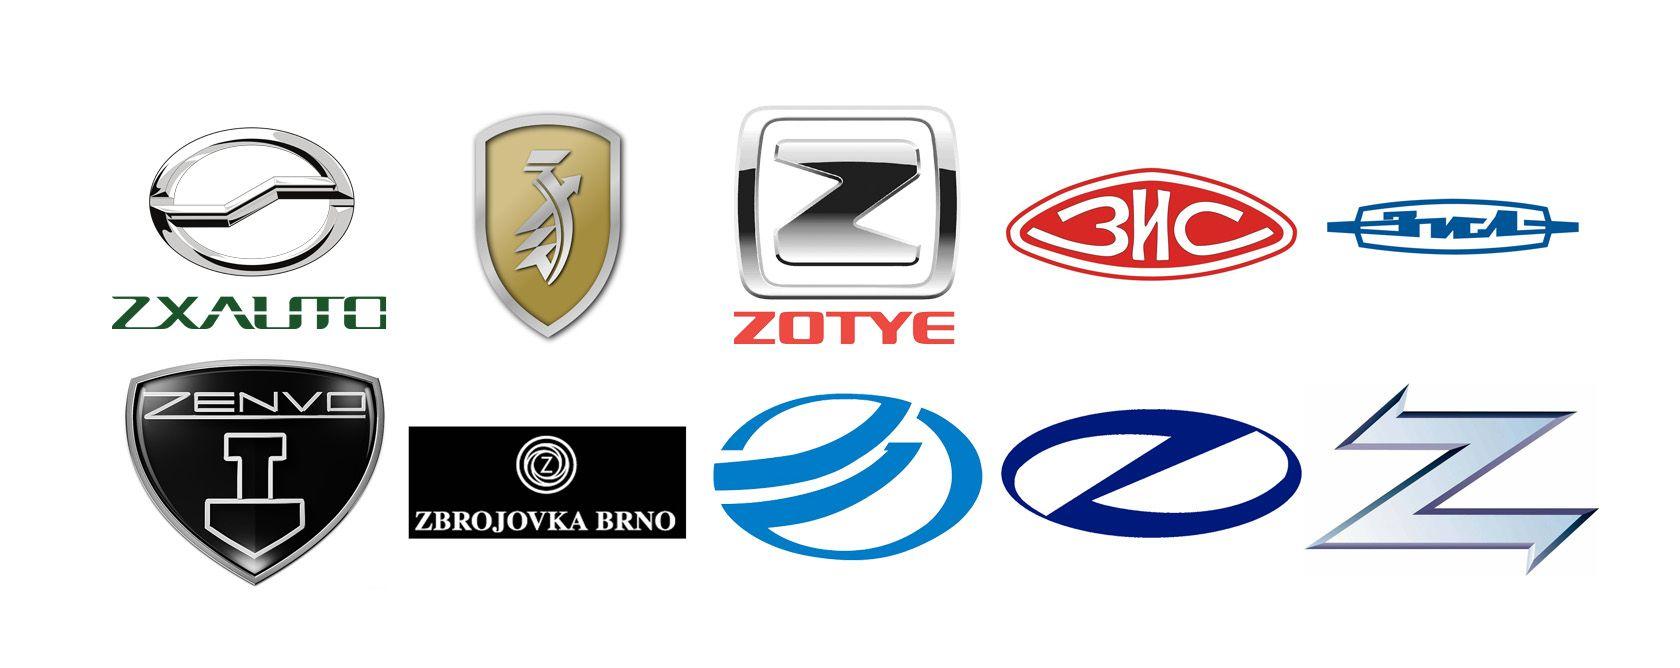 Z Car Company Logo - Car Brands With A Z. World Cars Brands